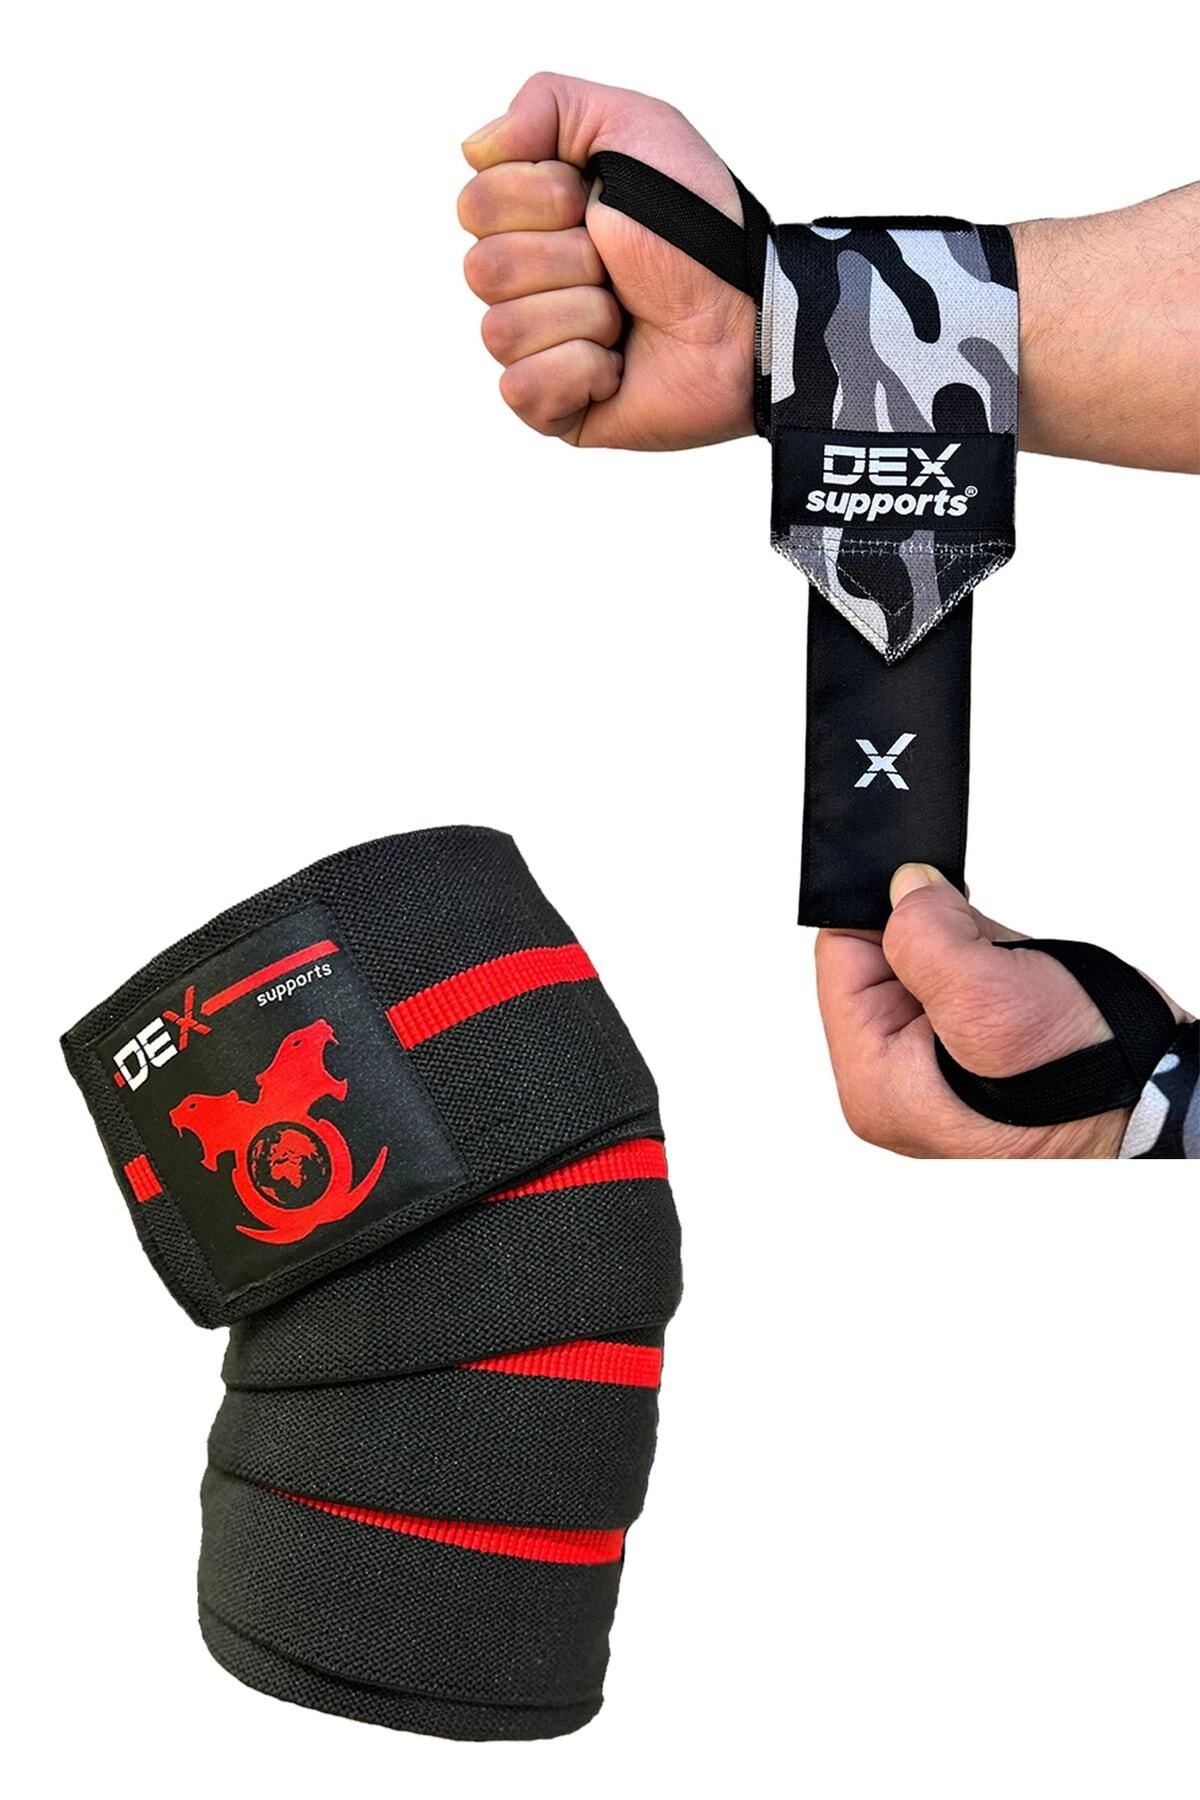 Dex Supports Lasting Energy Spor Dizlik Knee Wraps , Spor Bileklik Kamuflaj Wrist Wraps 2'li Set